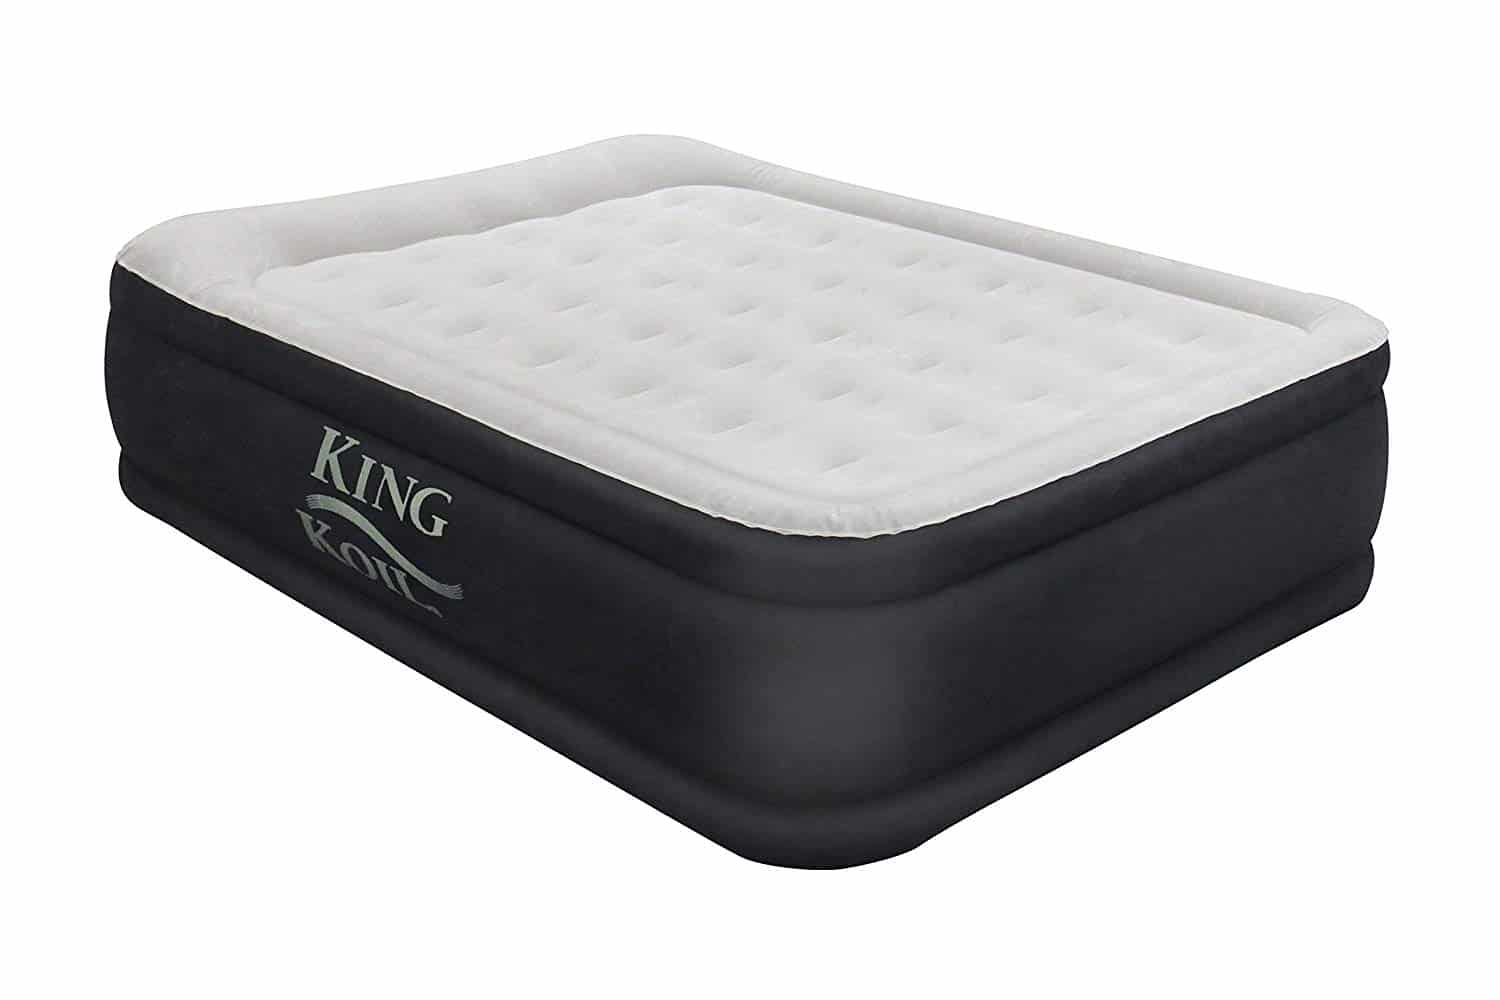 king koil air mattress reviews